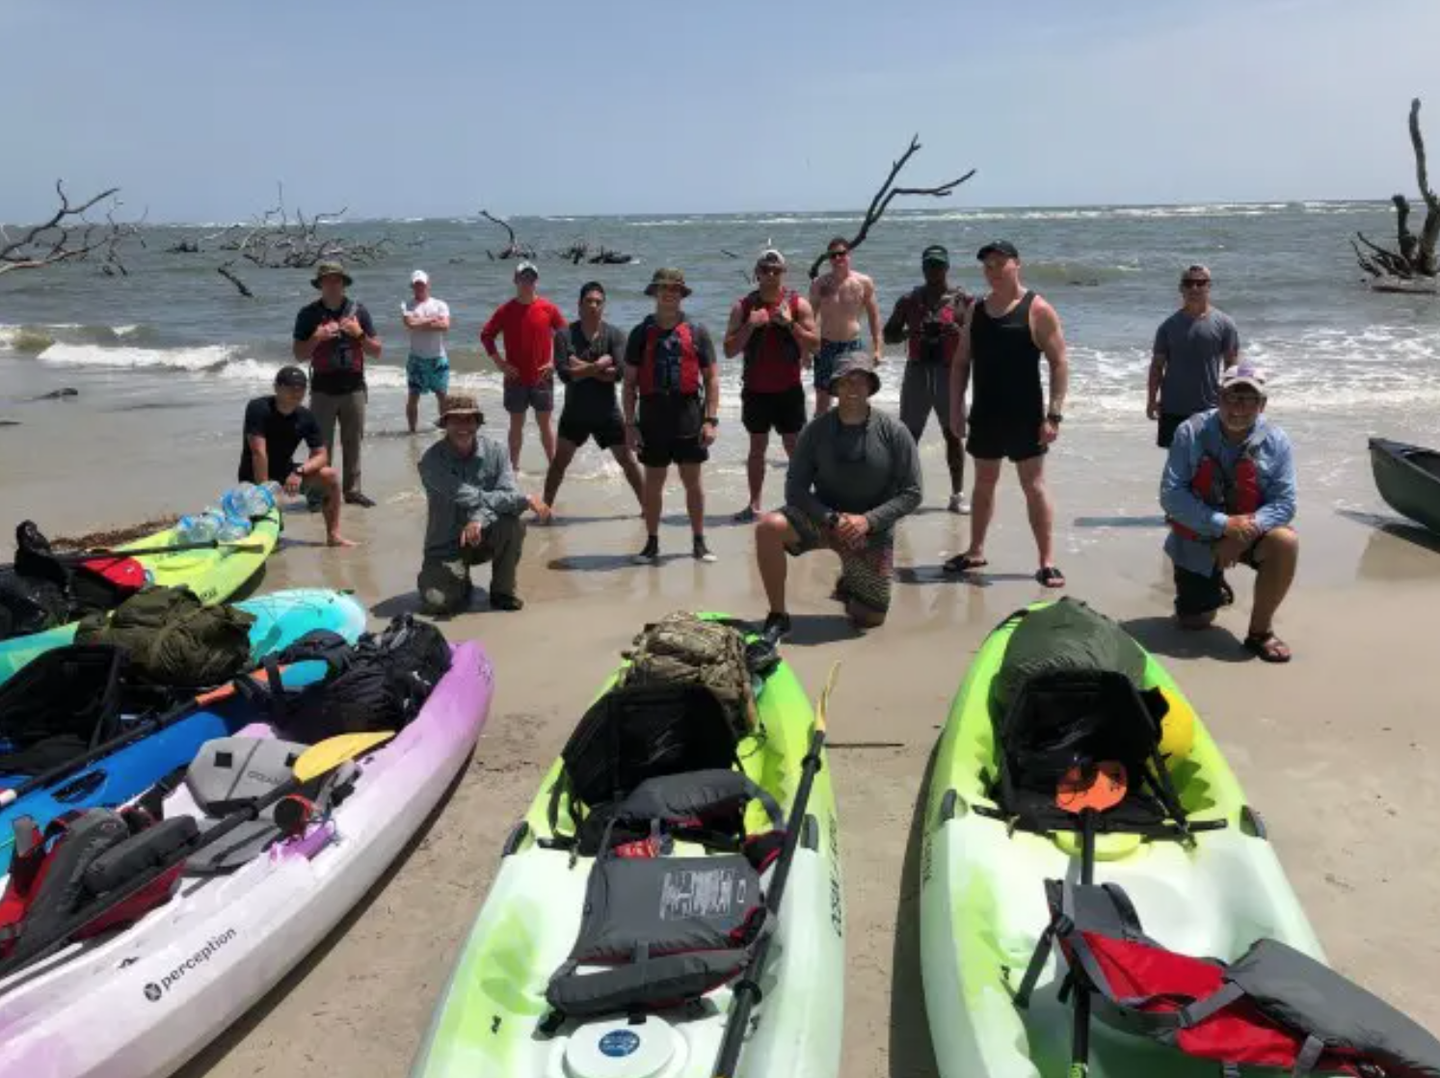 <em>Rangers preparing to launch their kayaks into the ocean (U.S. Army).</em>